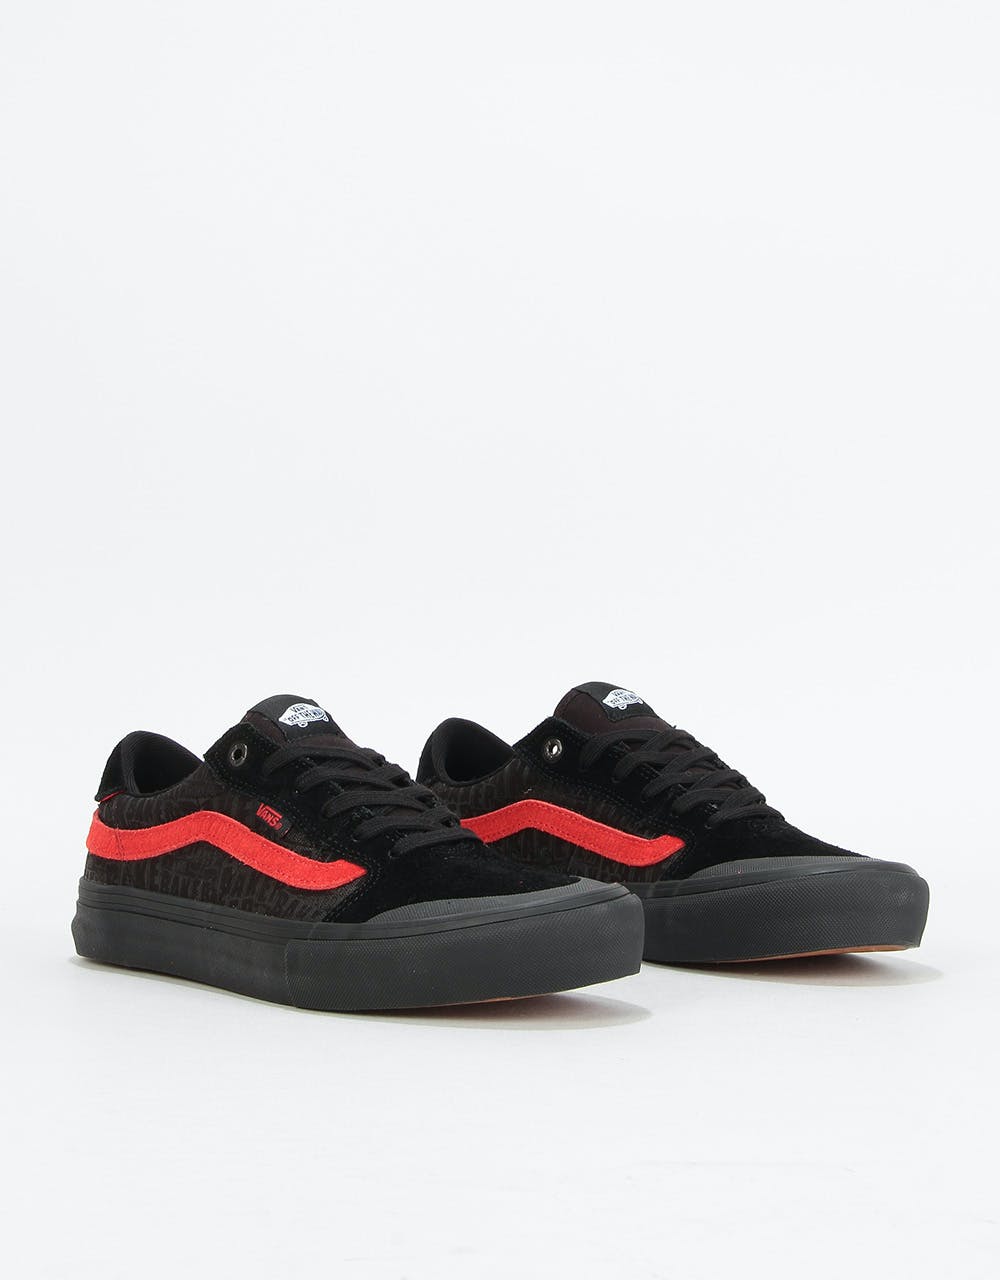 Vans Style 112 Pro Skate Shoes - (Baker) Black/Black/Red